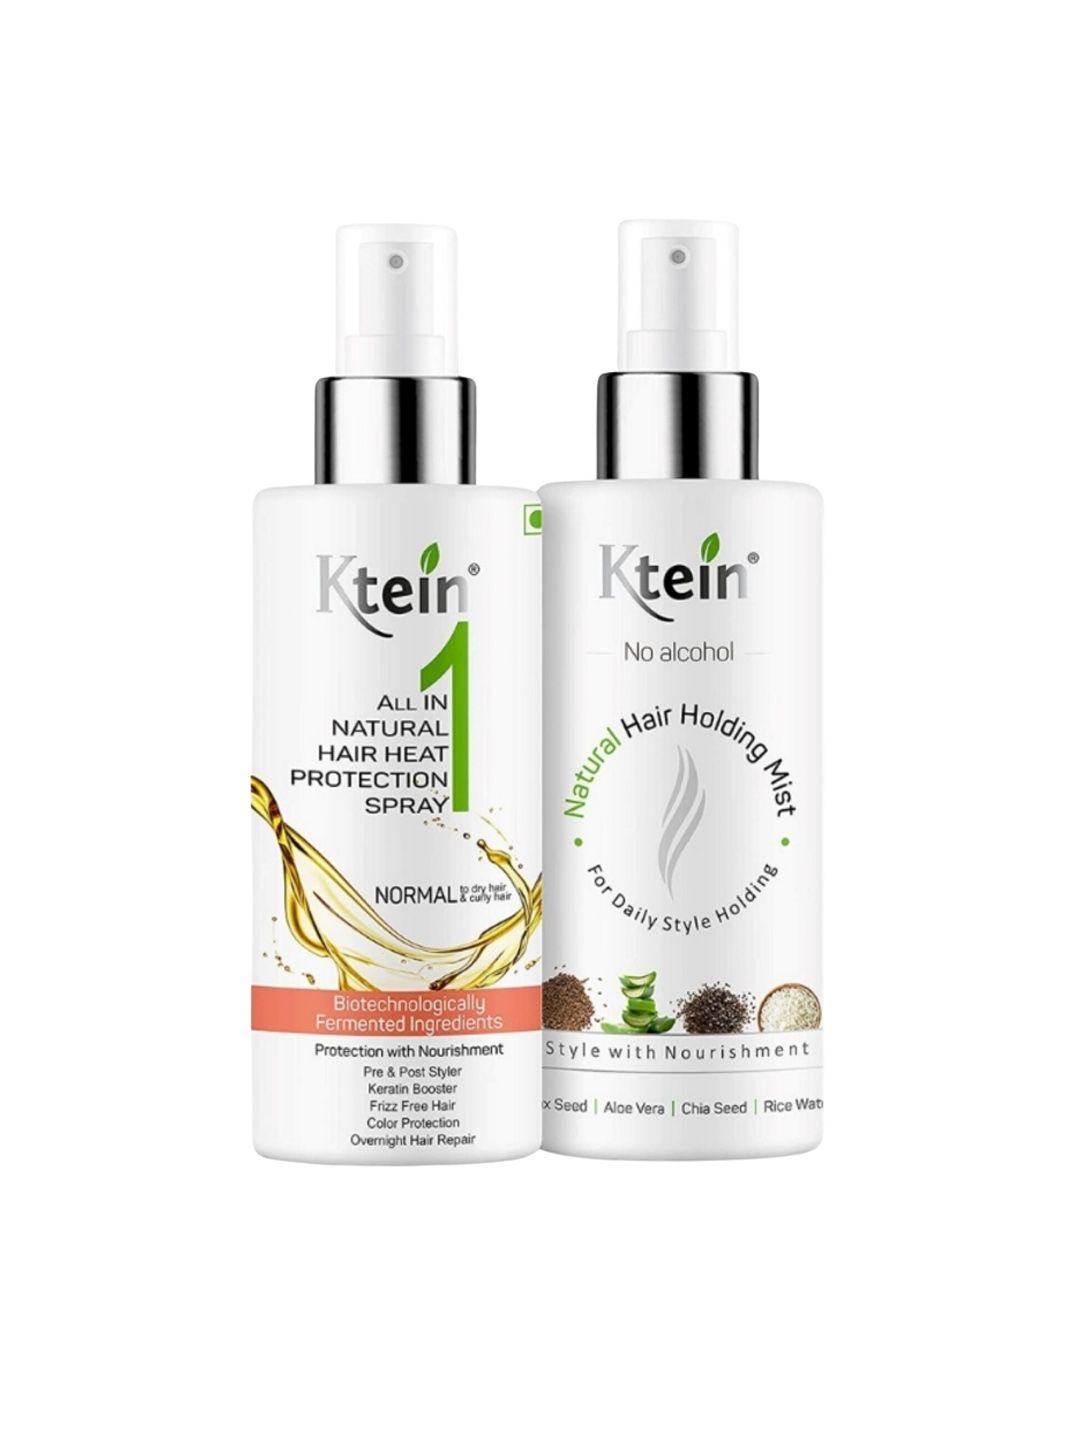 ktein-natural-all-in-1-heat-protection-spray-&-ktein-hair-holding-spray-200ml